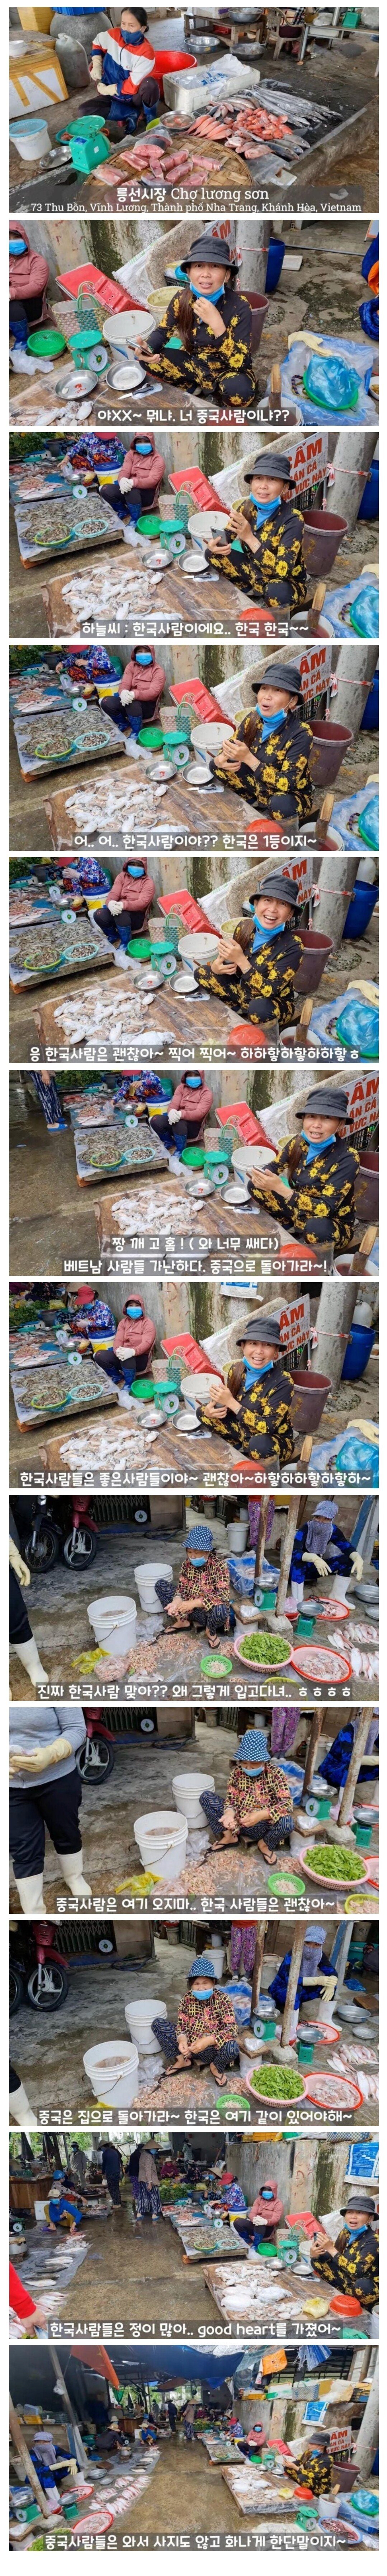 nokbeon.net-베트남에서 짱깨의 위상-1번 이미지